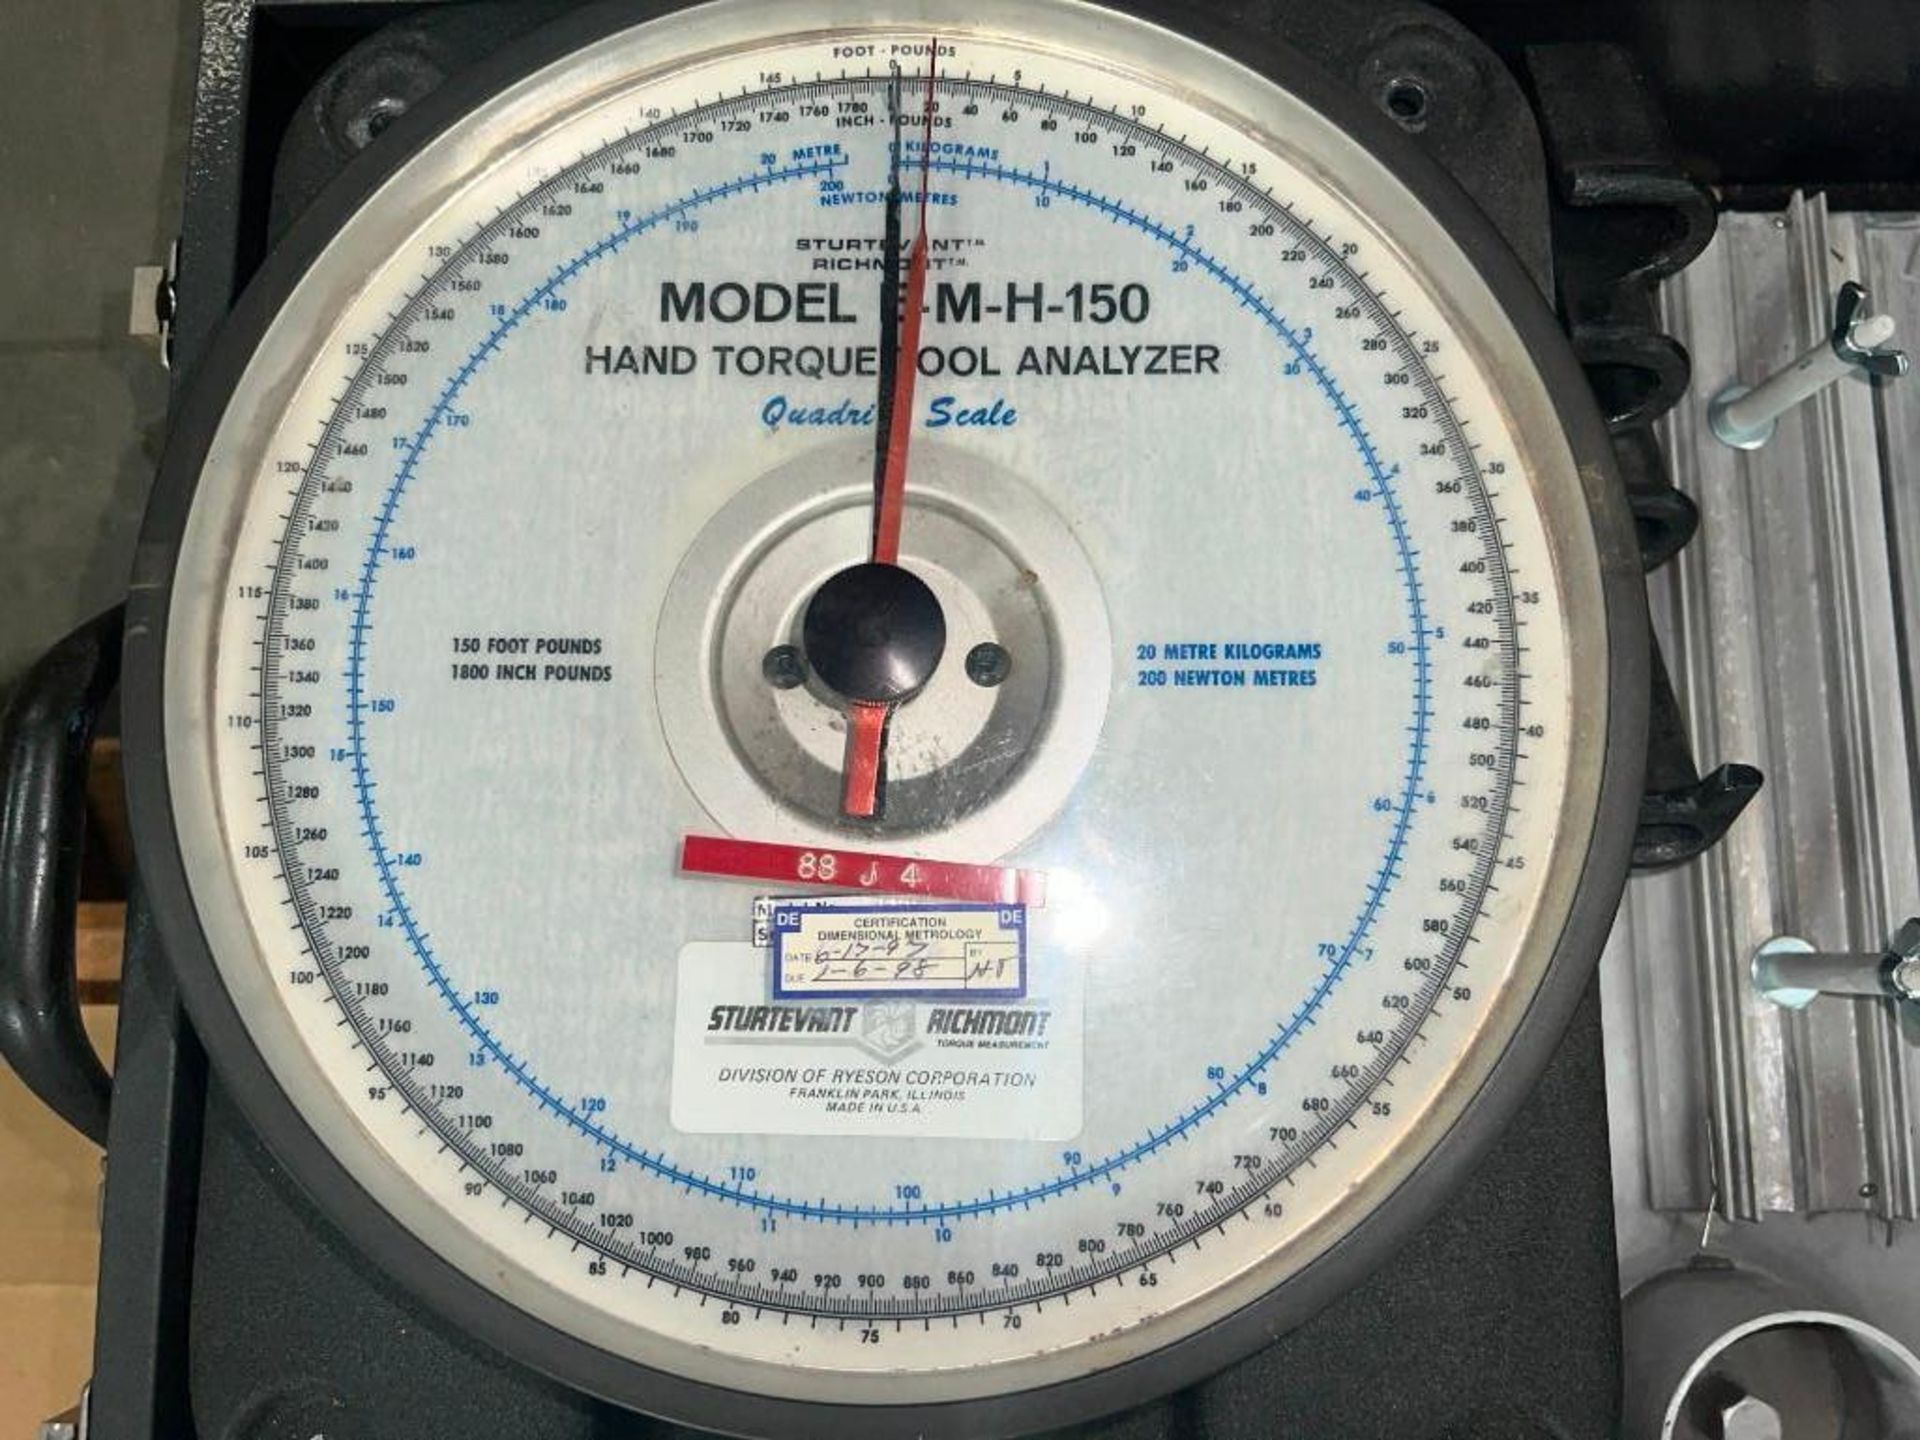 Sturtevant Richmont Torq-Tester System 3 - MODEL: E-M-H-150 Tool Analyzer - Image 3 of 3